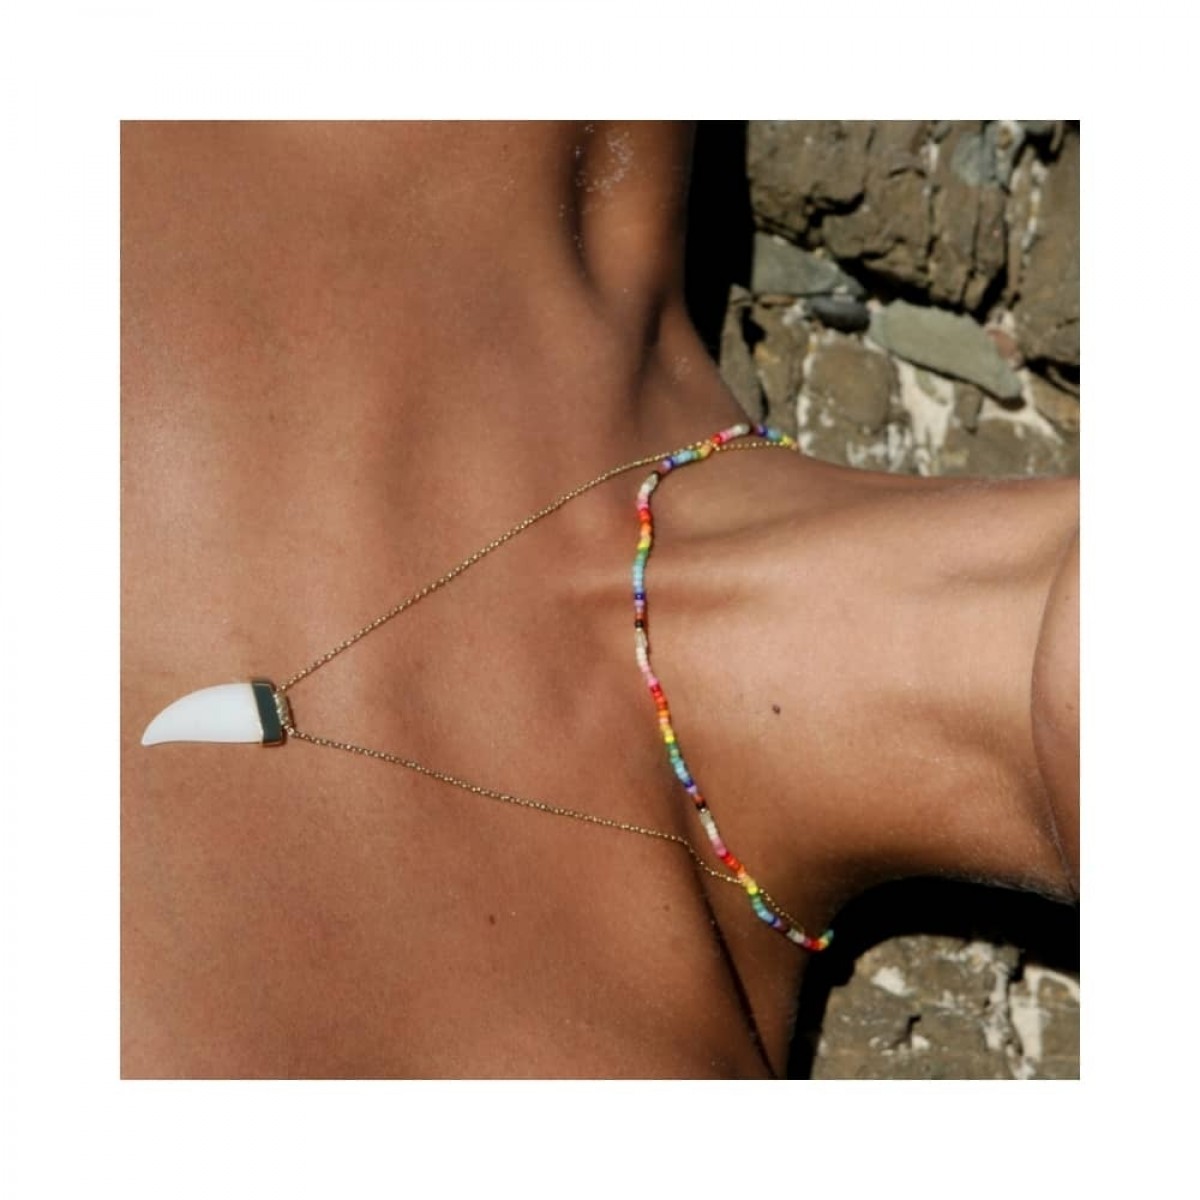 anni lu nuanua necklace - rainbow - model på strand